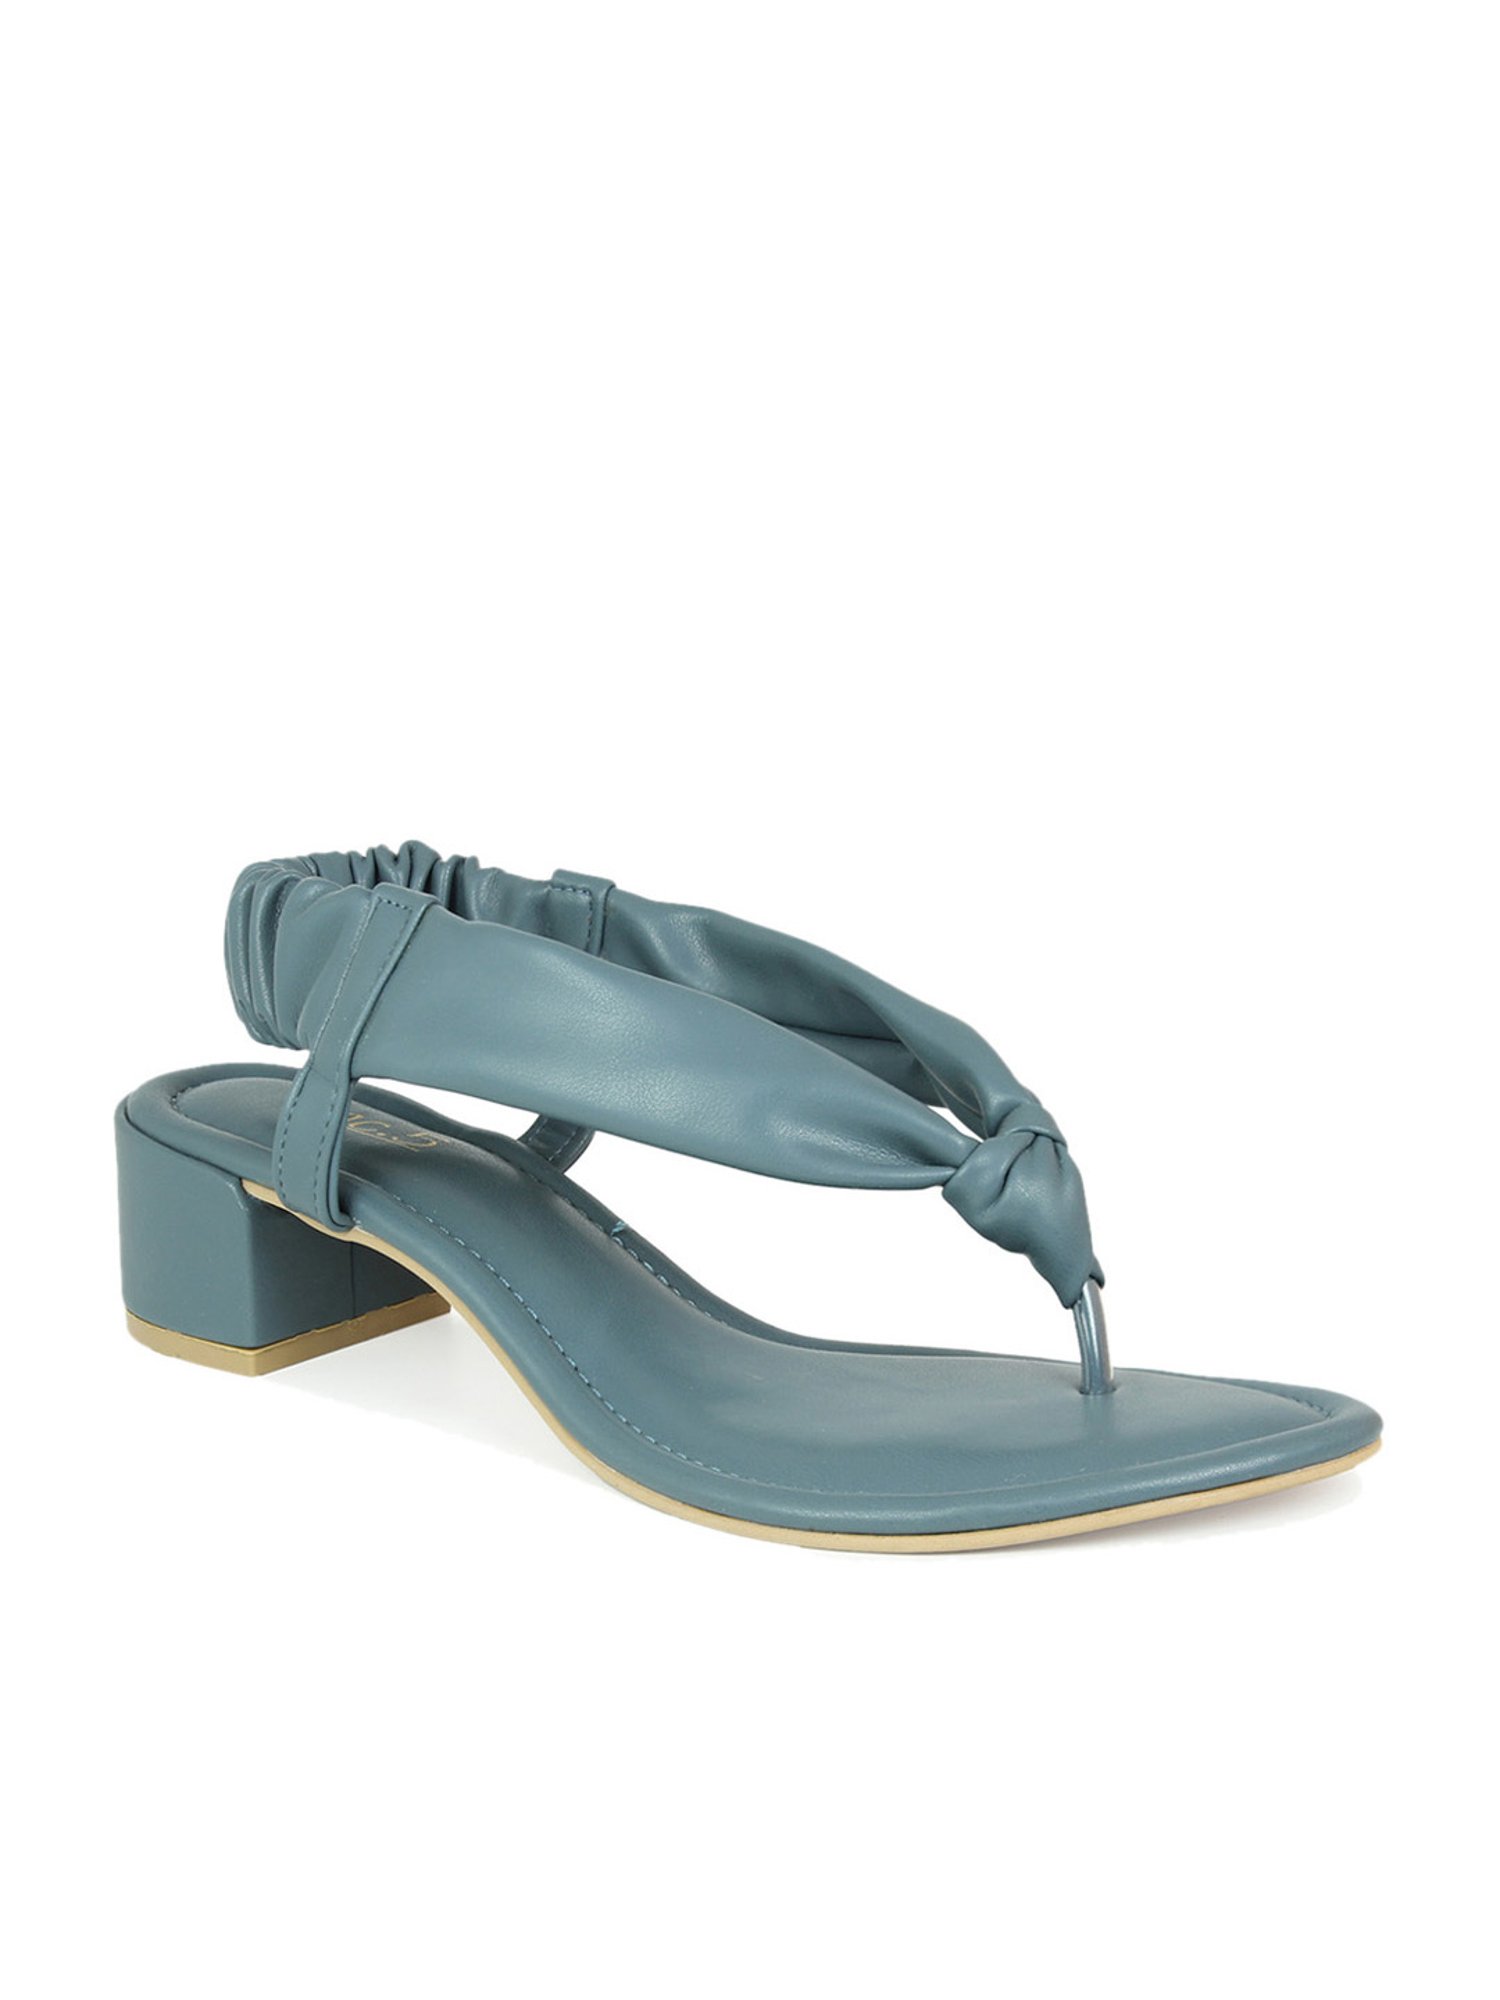 Buy Light Blue Flat Sandals for Women by REFOAM Online | Ajio.com